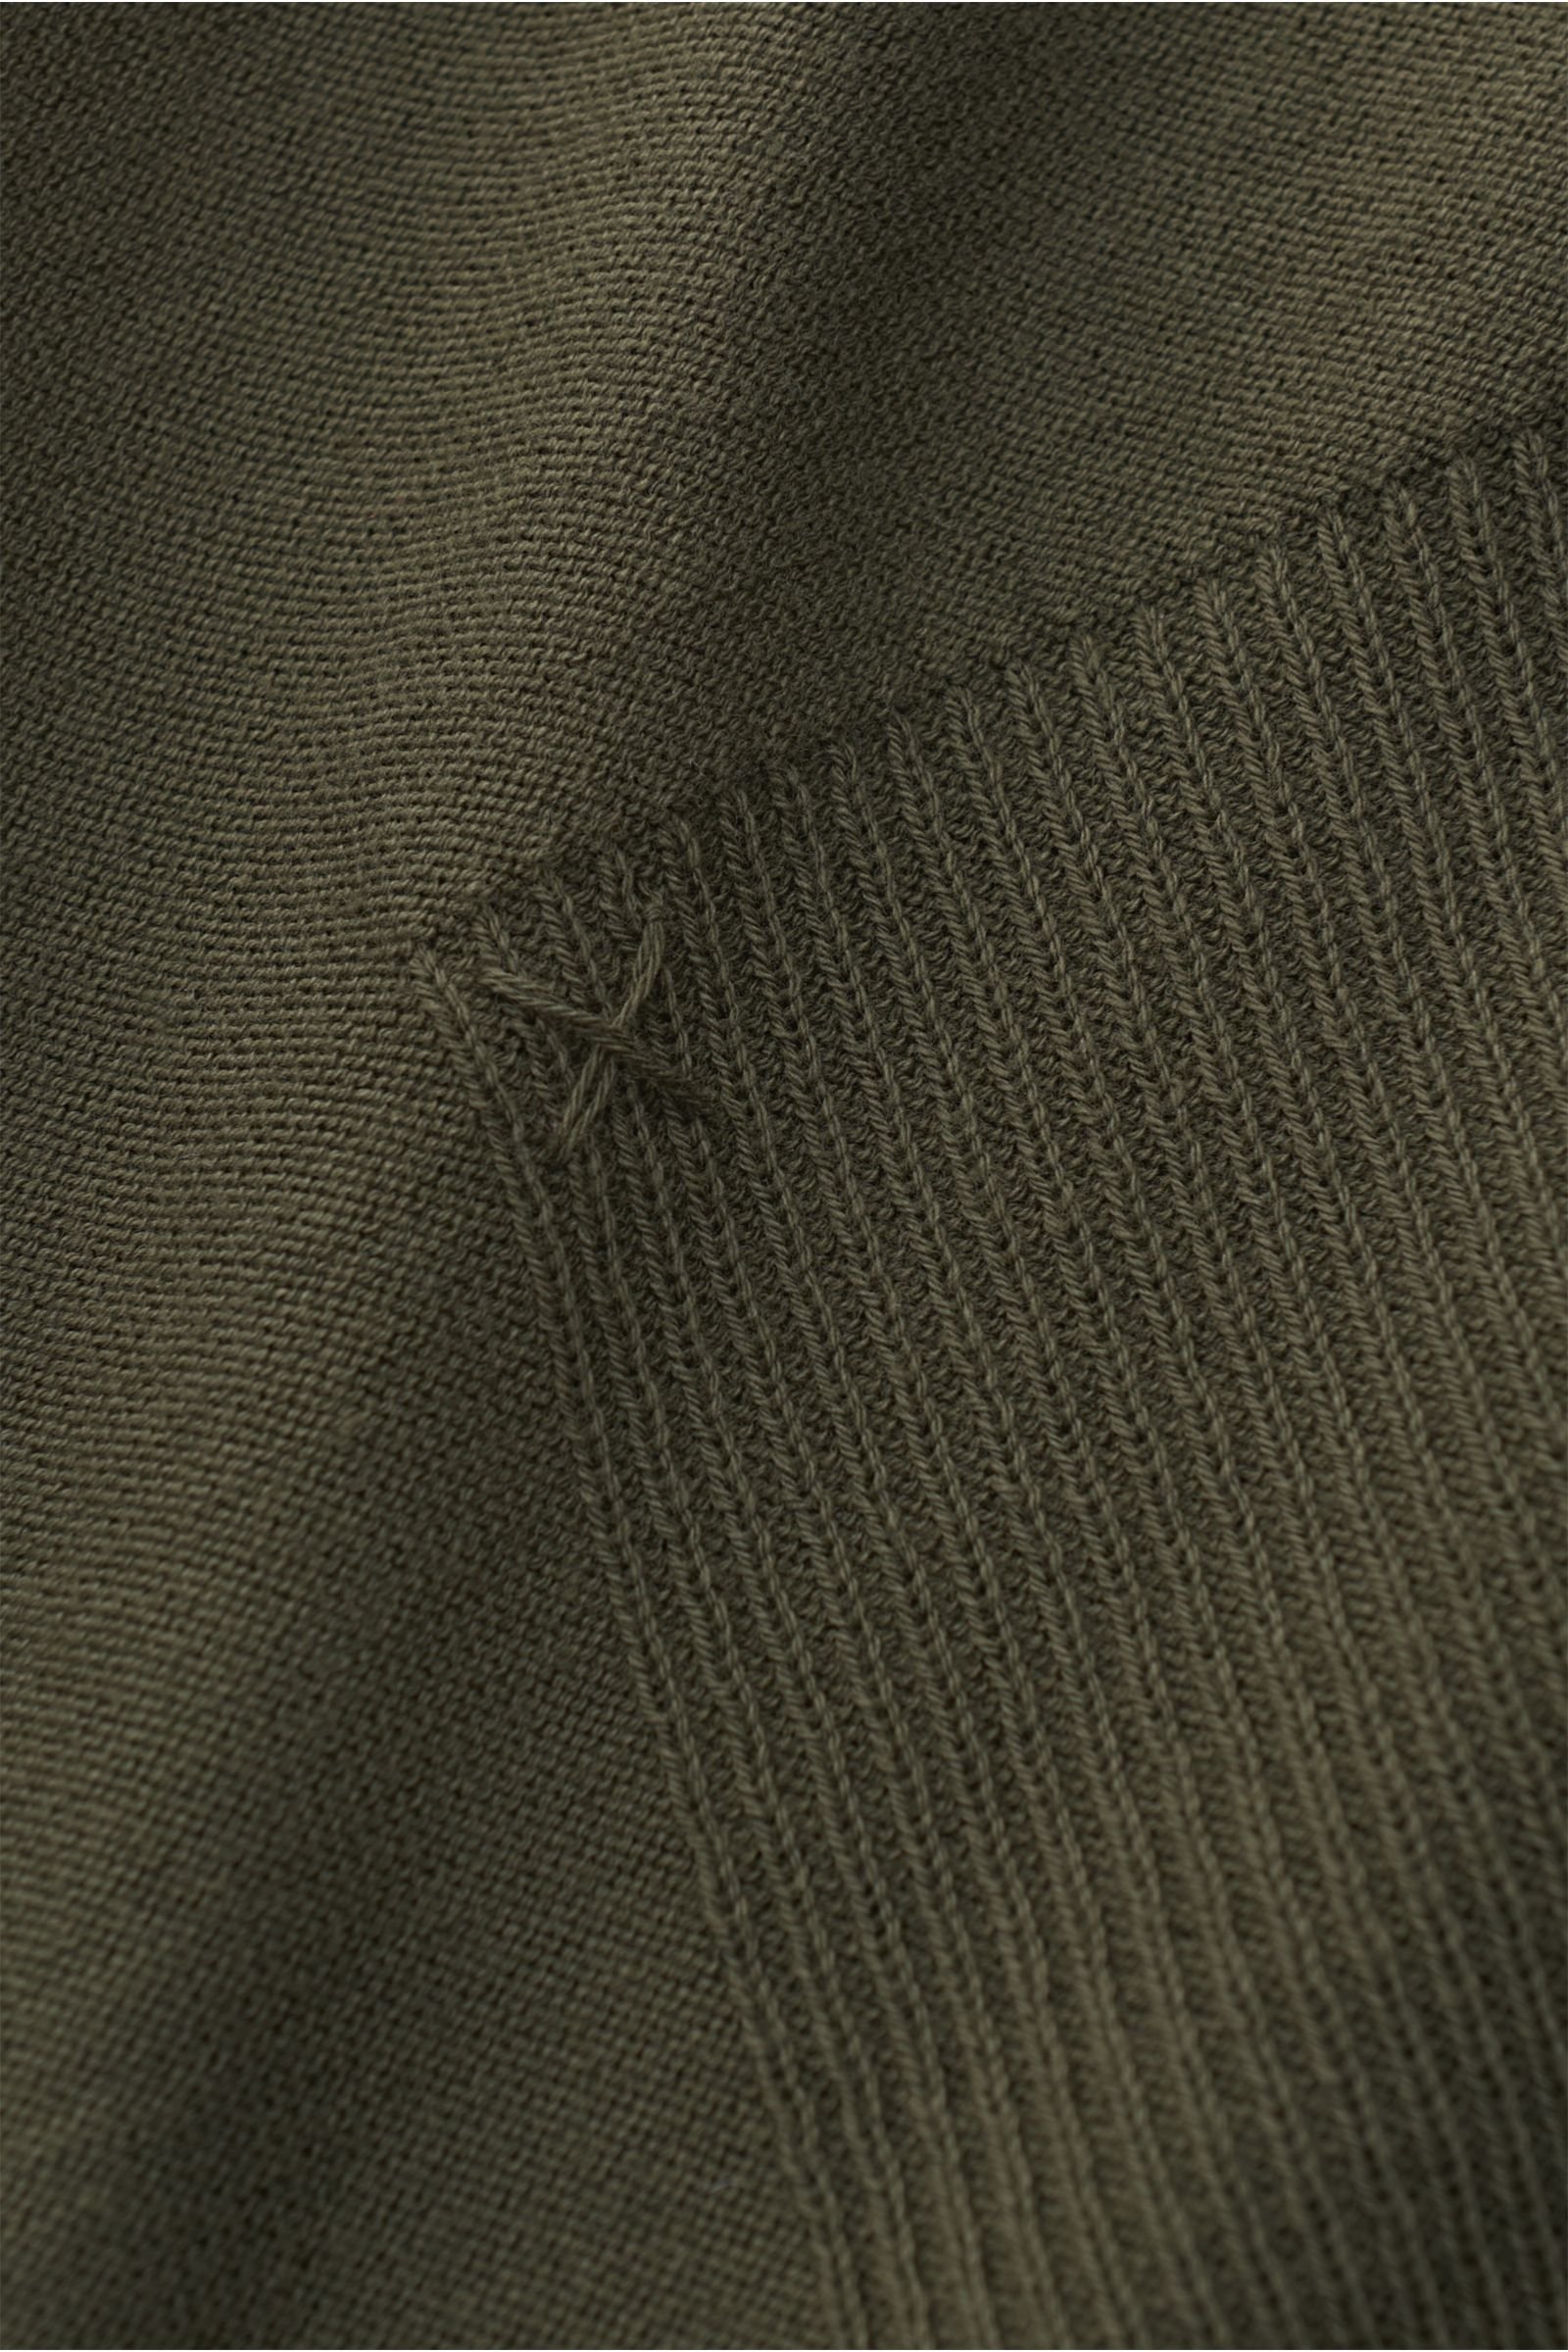 WEBER + WEBER short sleeve crew neck jumper \'Cotton Knit T-Shirt\' olive |  WEBER+WEBER